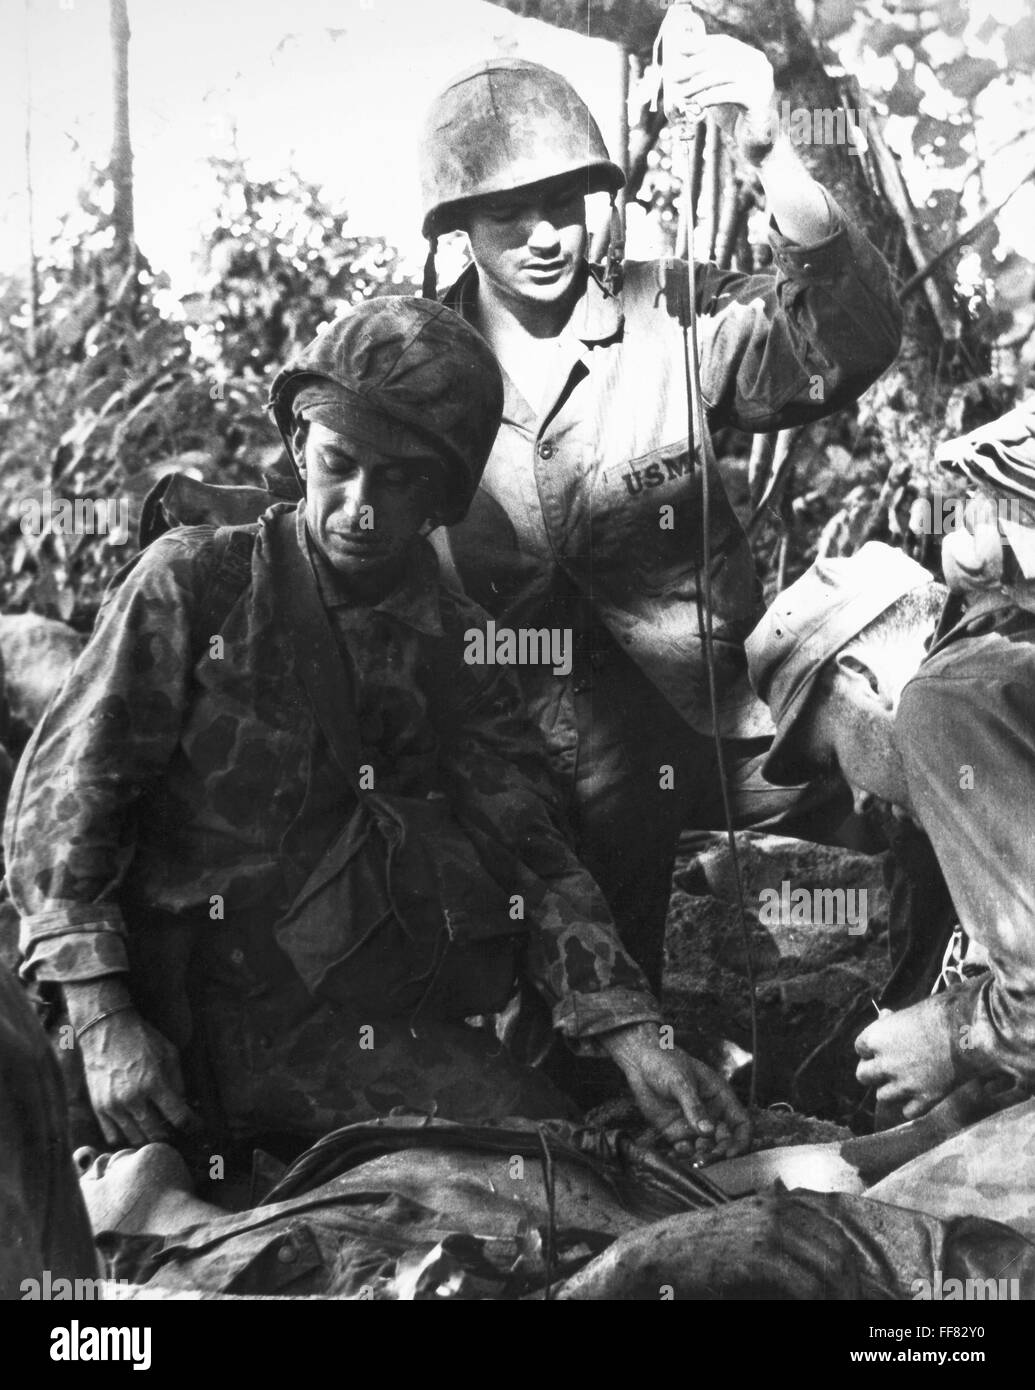 WORLD WAR II: MARINE, 1943. /nLaying on a crude stretcher, a marine receives blood plasma at Bougainville during World War II, November 1943. Stock Photo